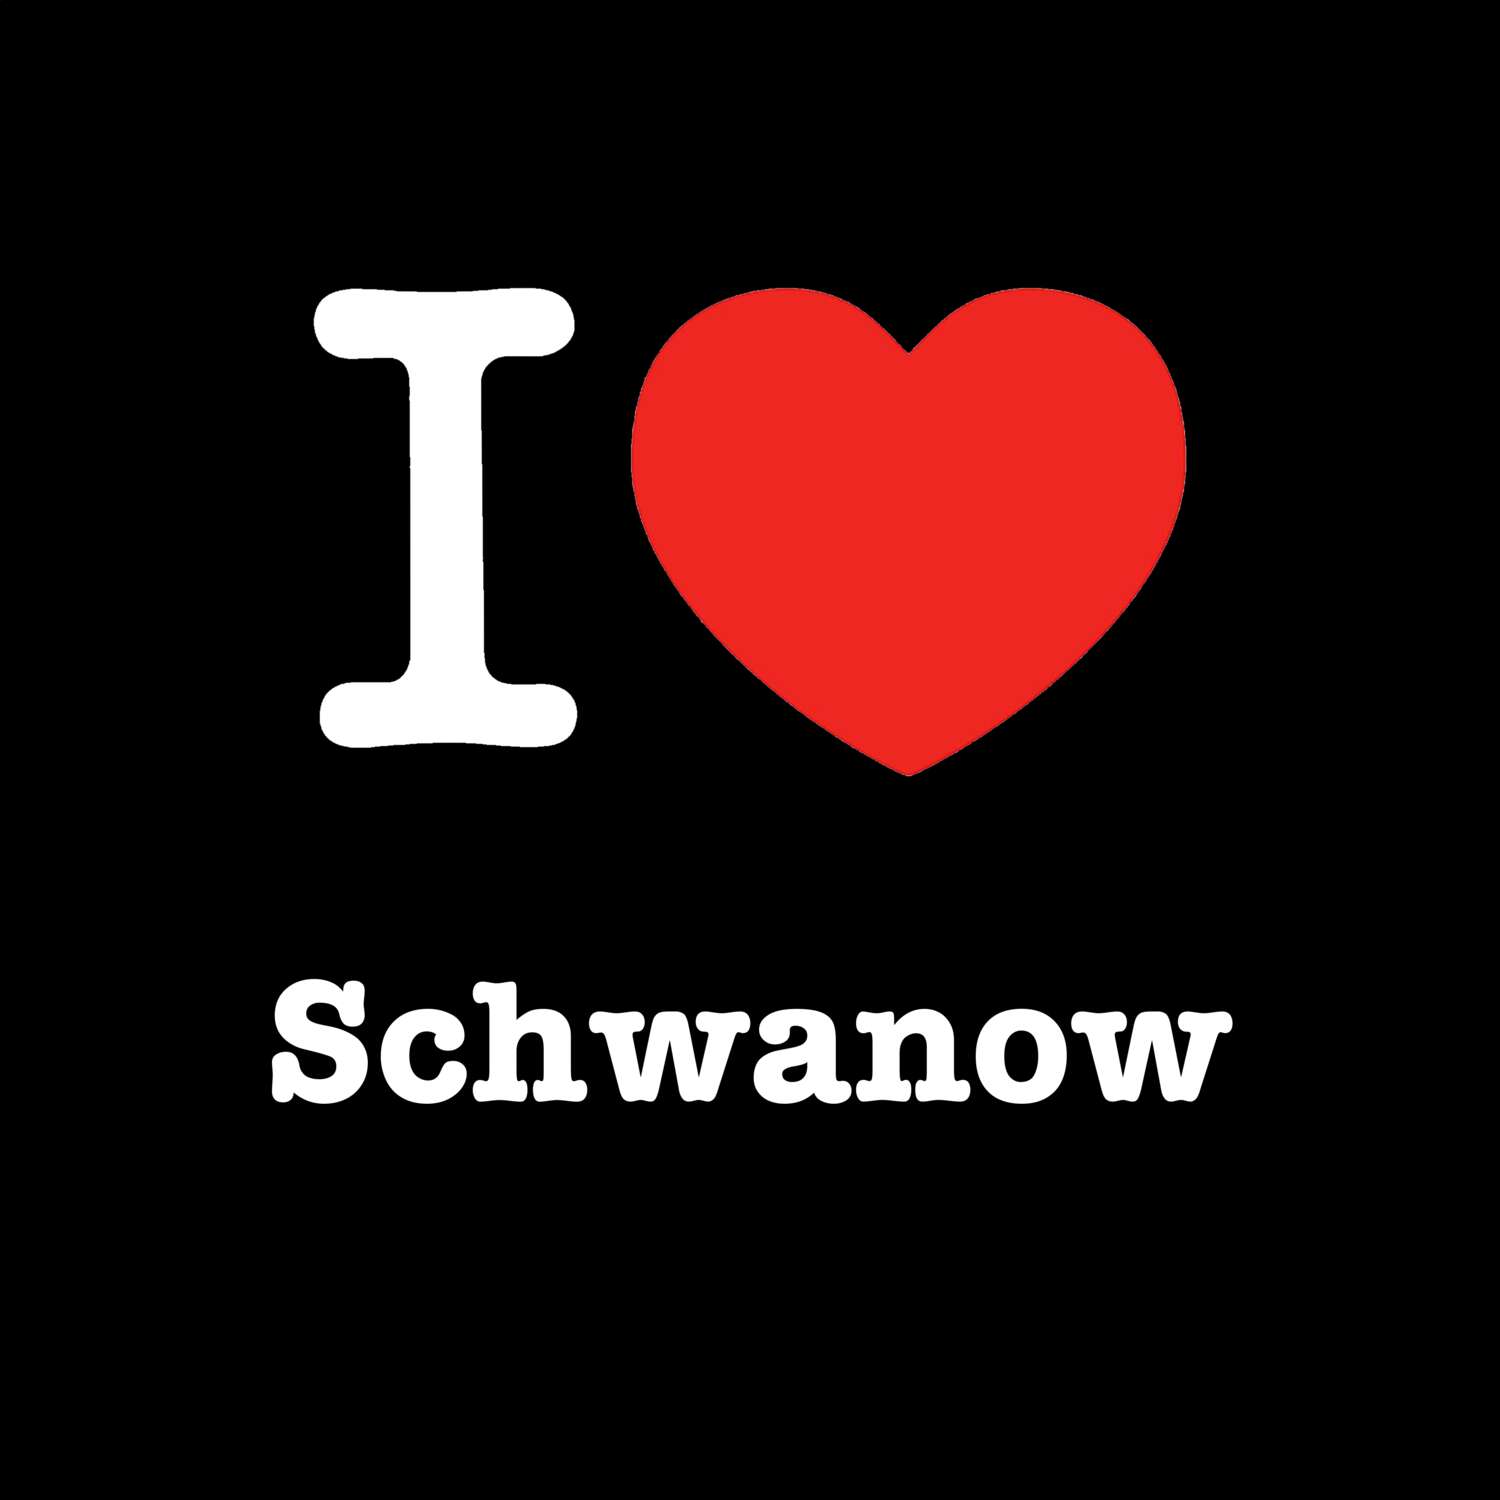 Schwanow T-Shirt »I love«